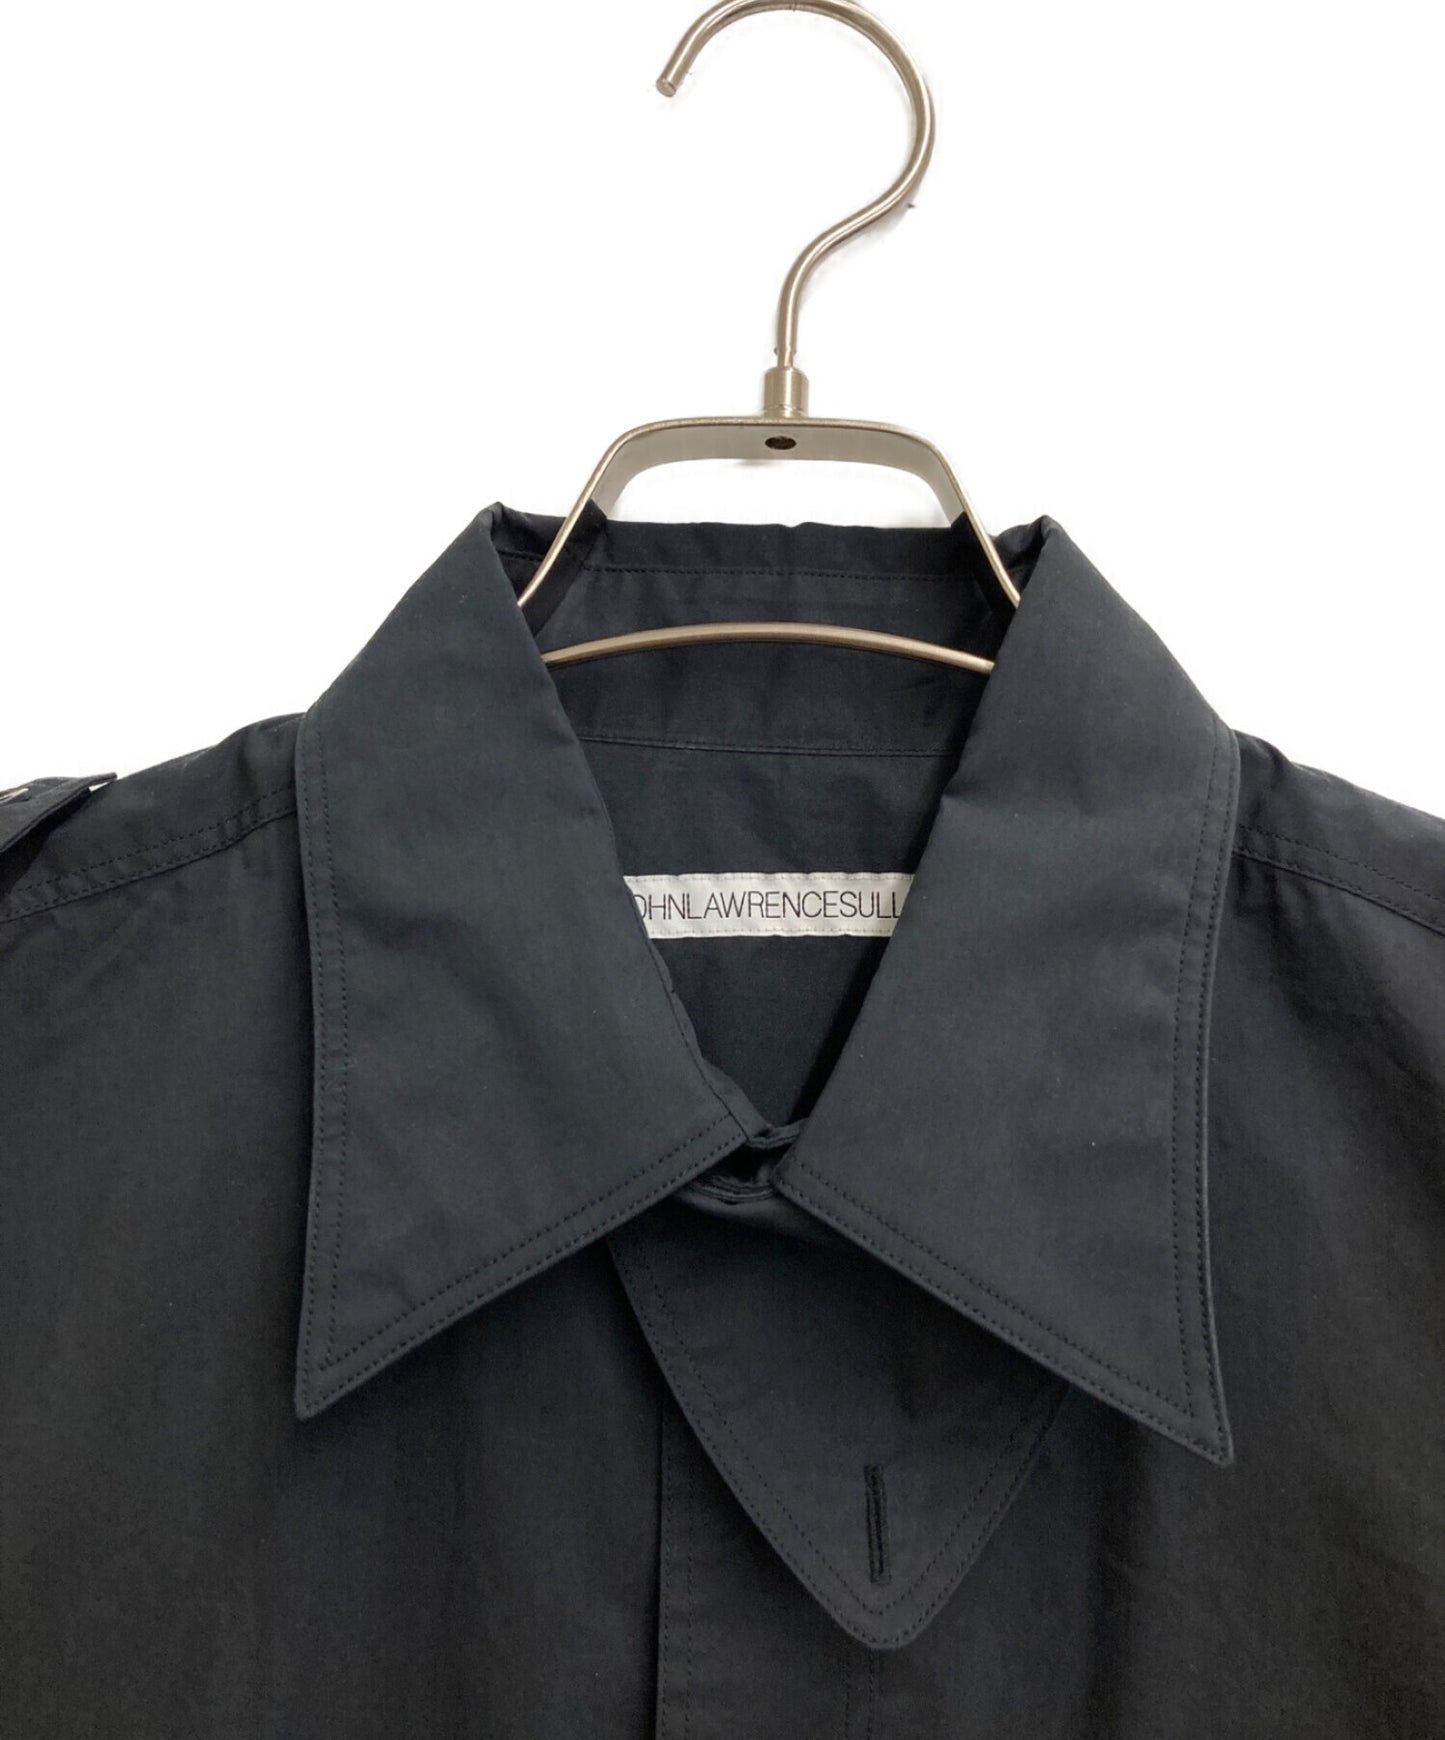 John Lawrence Sullivan Bontage 셔츠 / 20SS / Long Sleeve Shirt / Shirt 3A001-0220-22